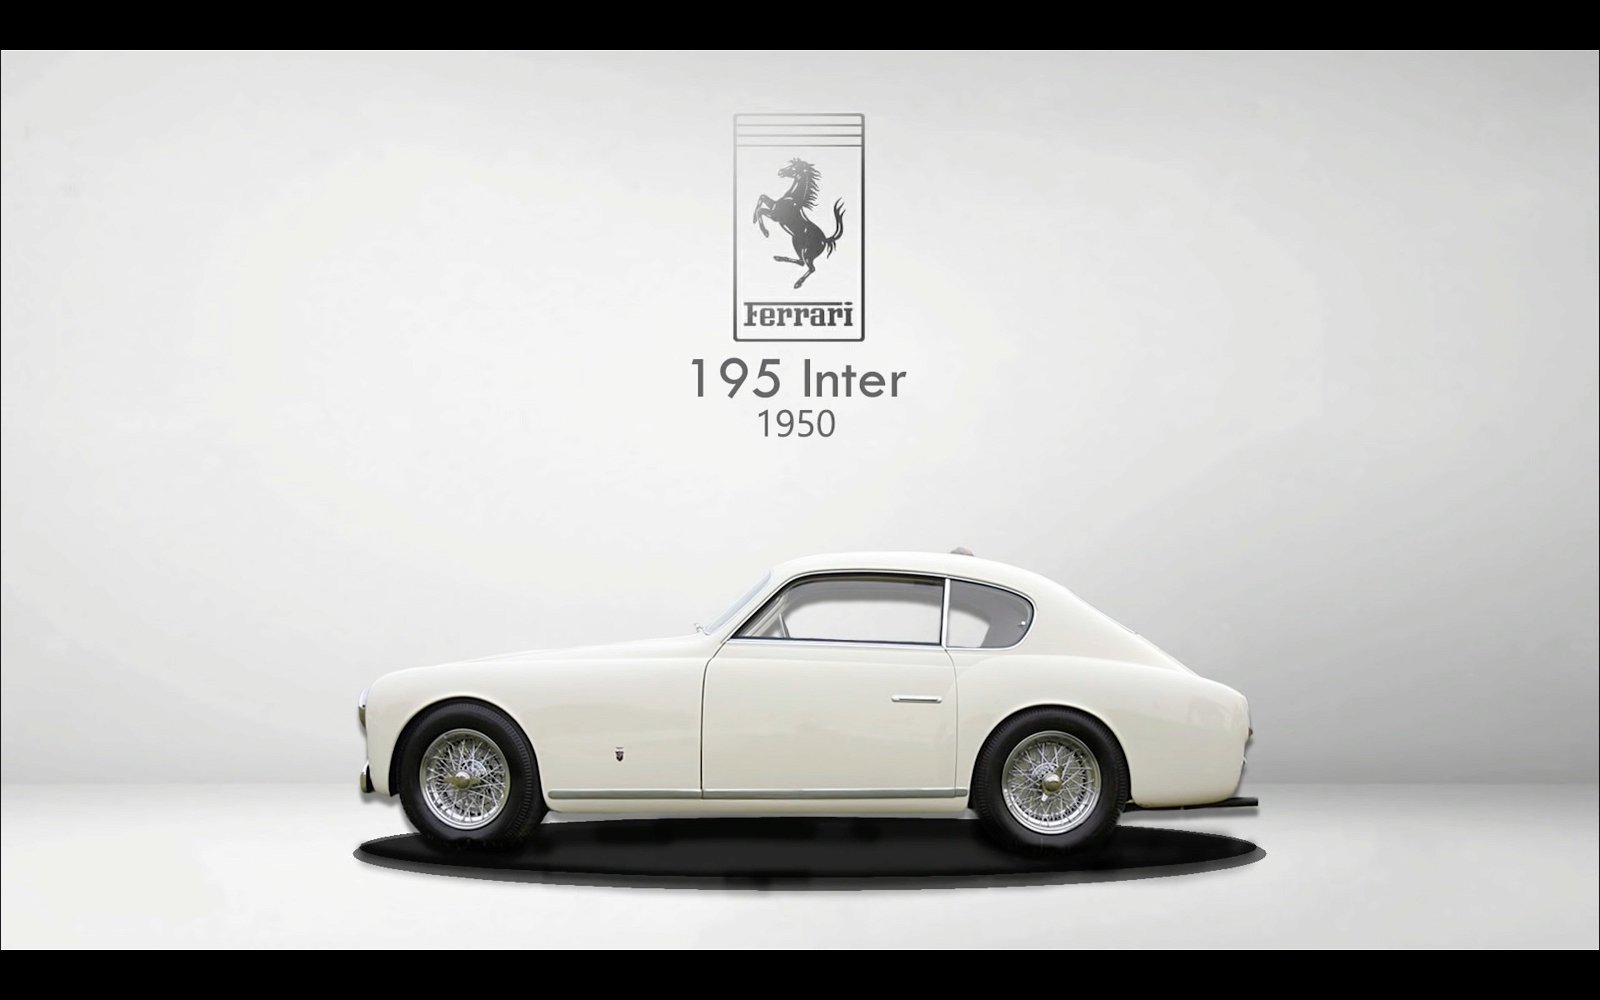 Ferrari 195 Inter 1950